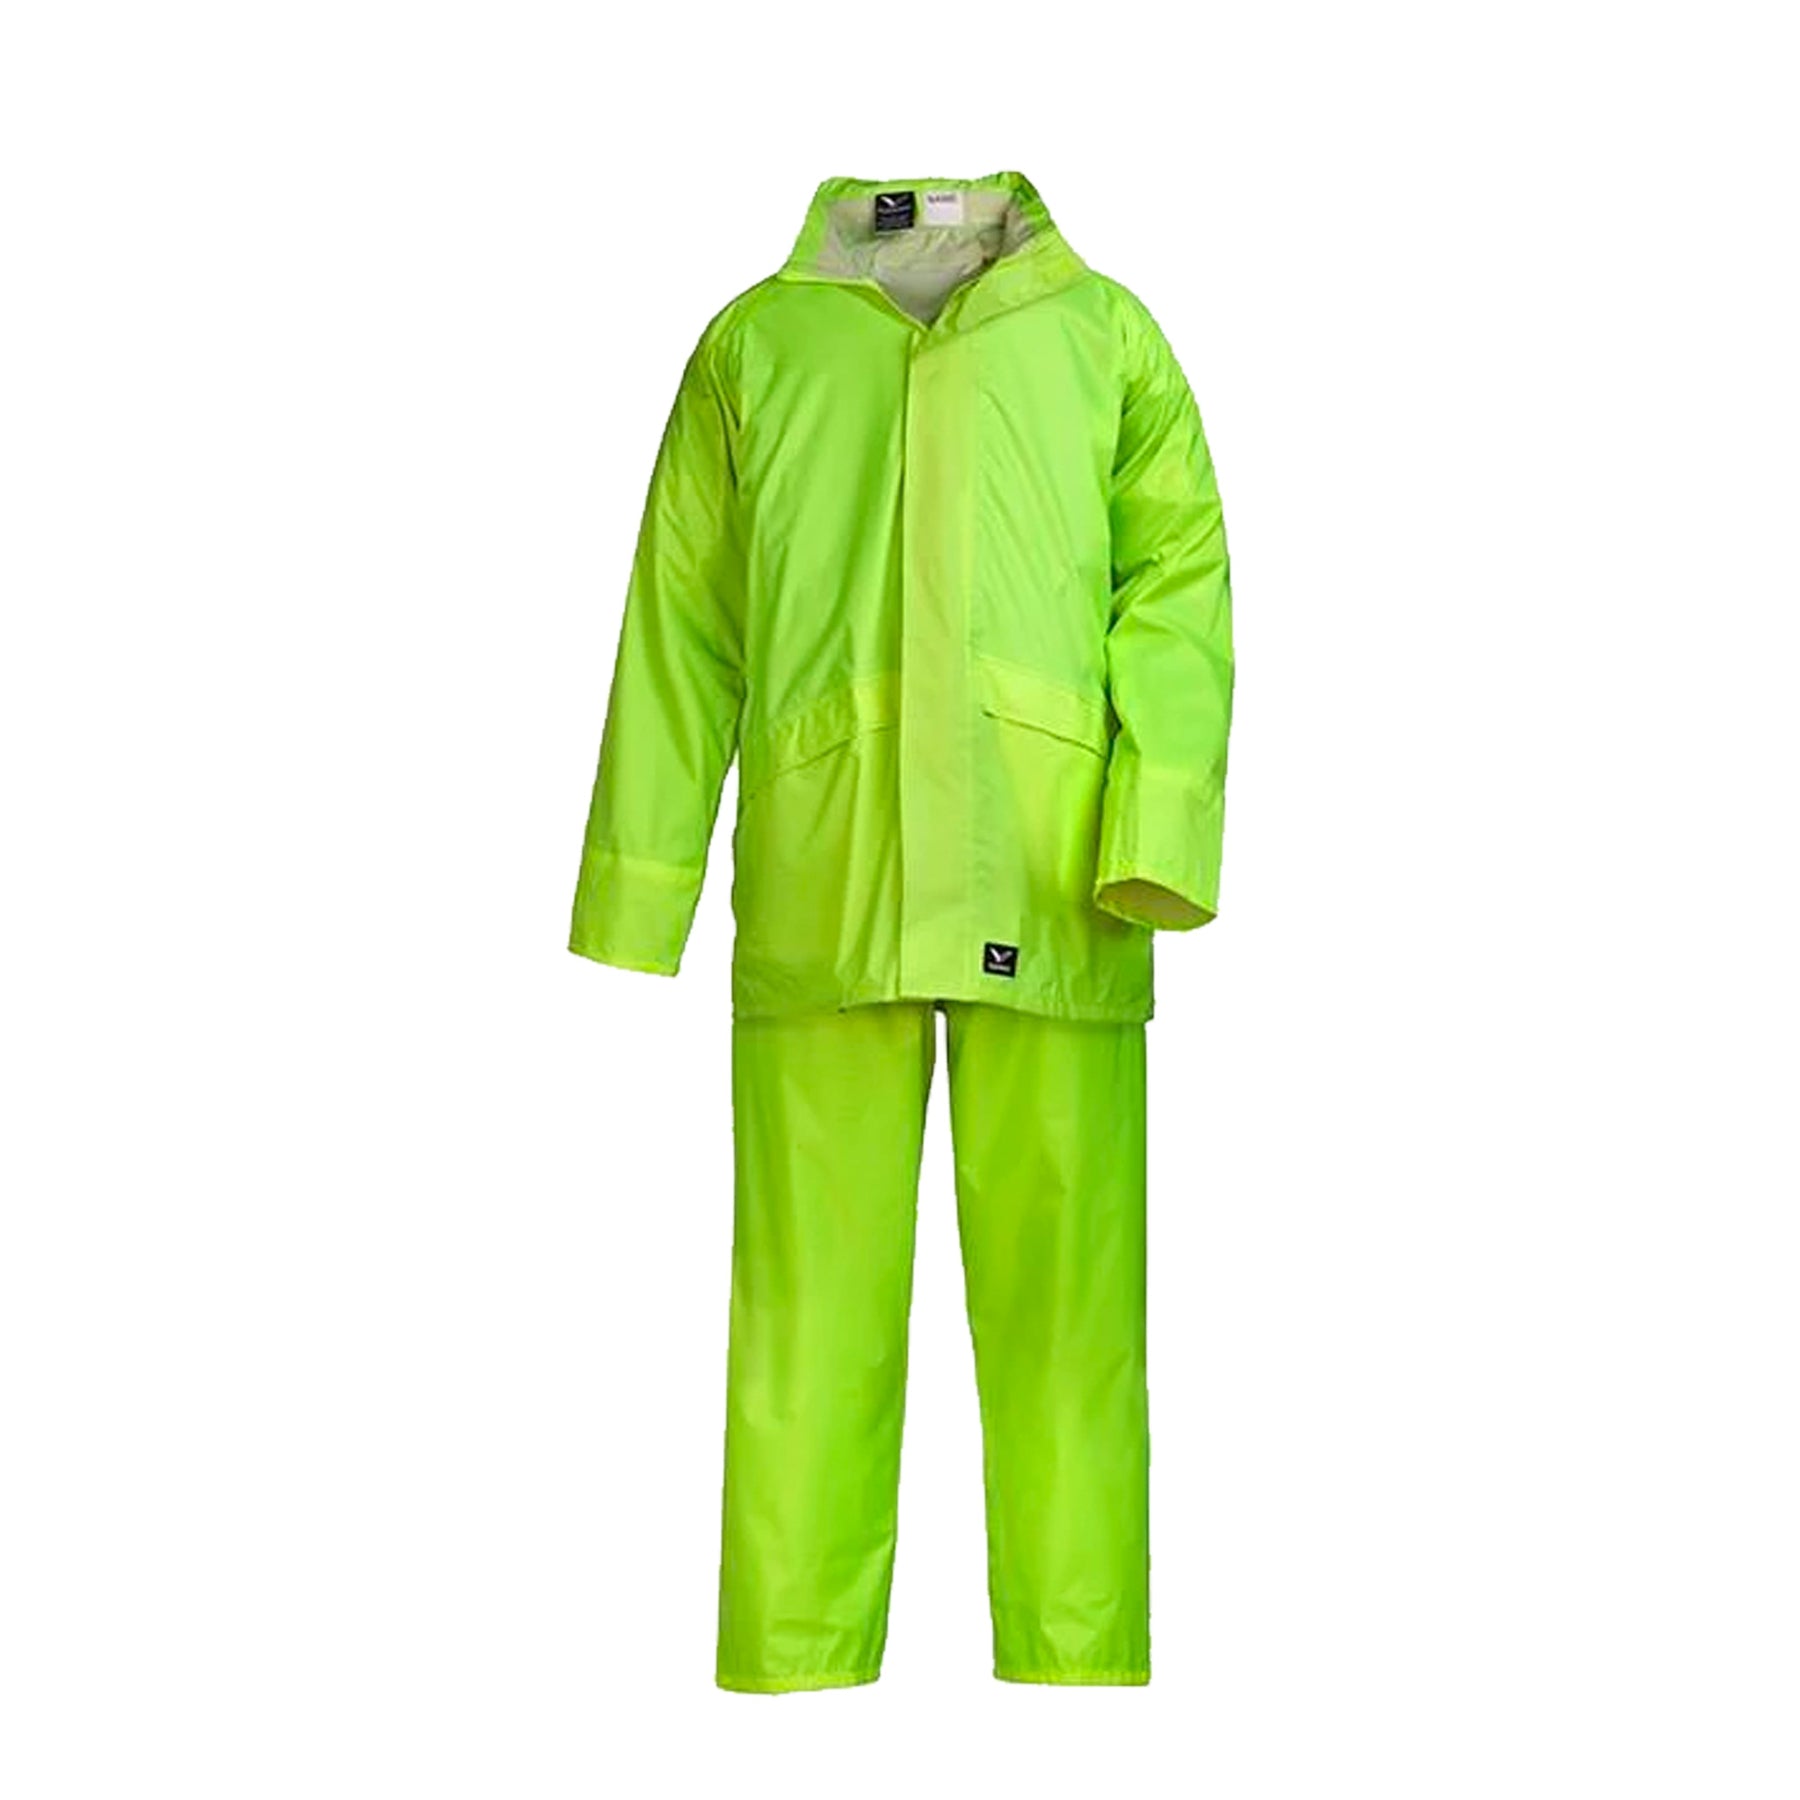 rainbird base set wet weather jacket and pants in fluoro yellow